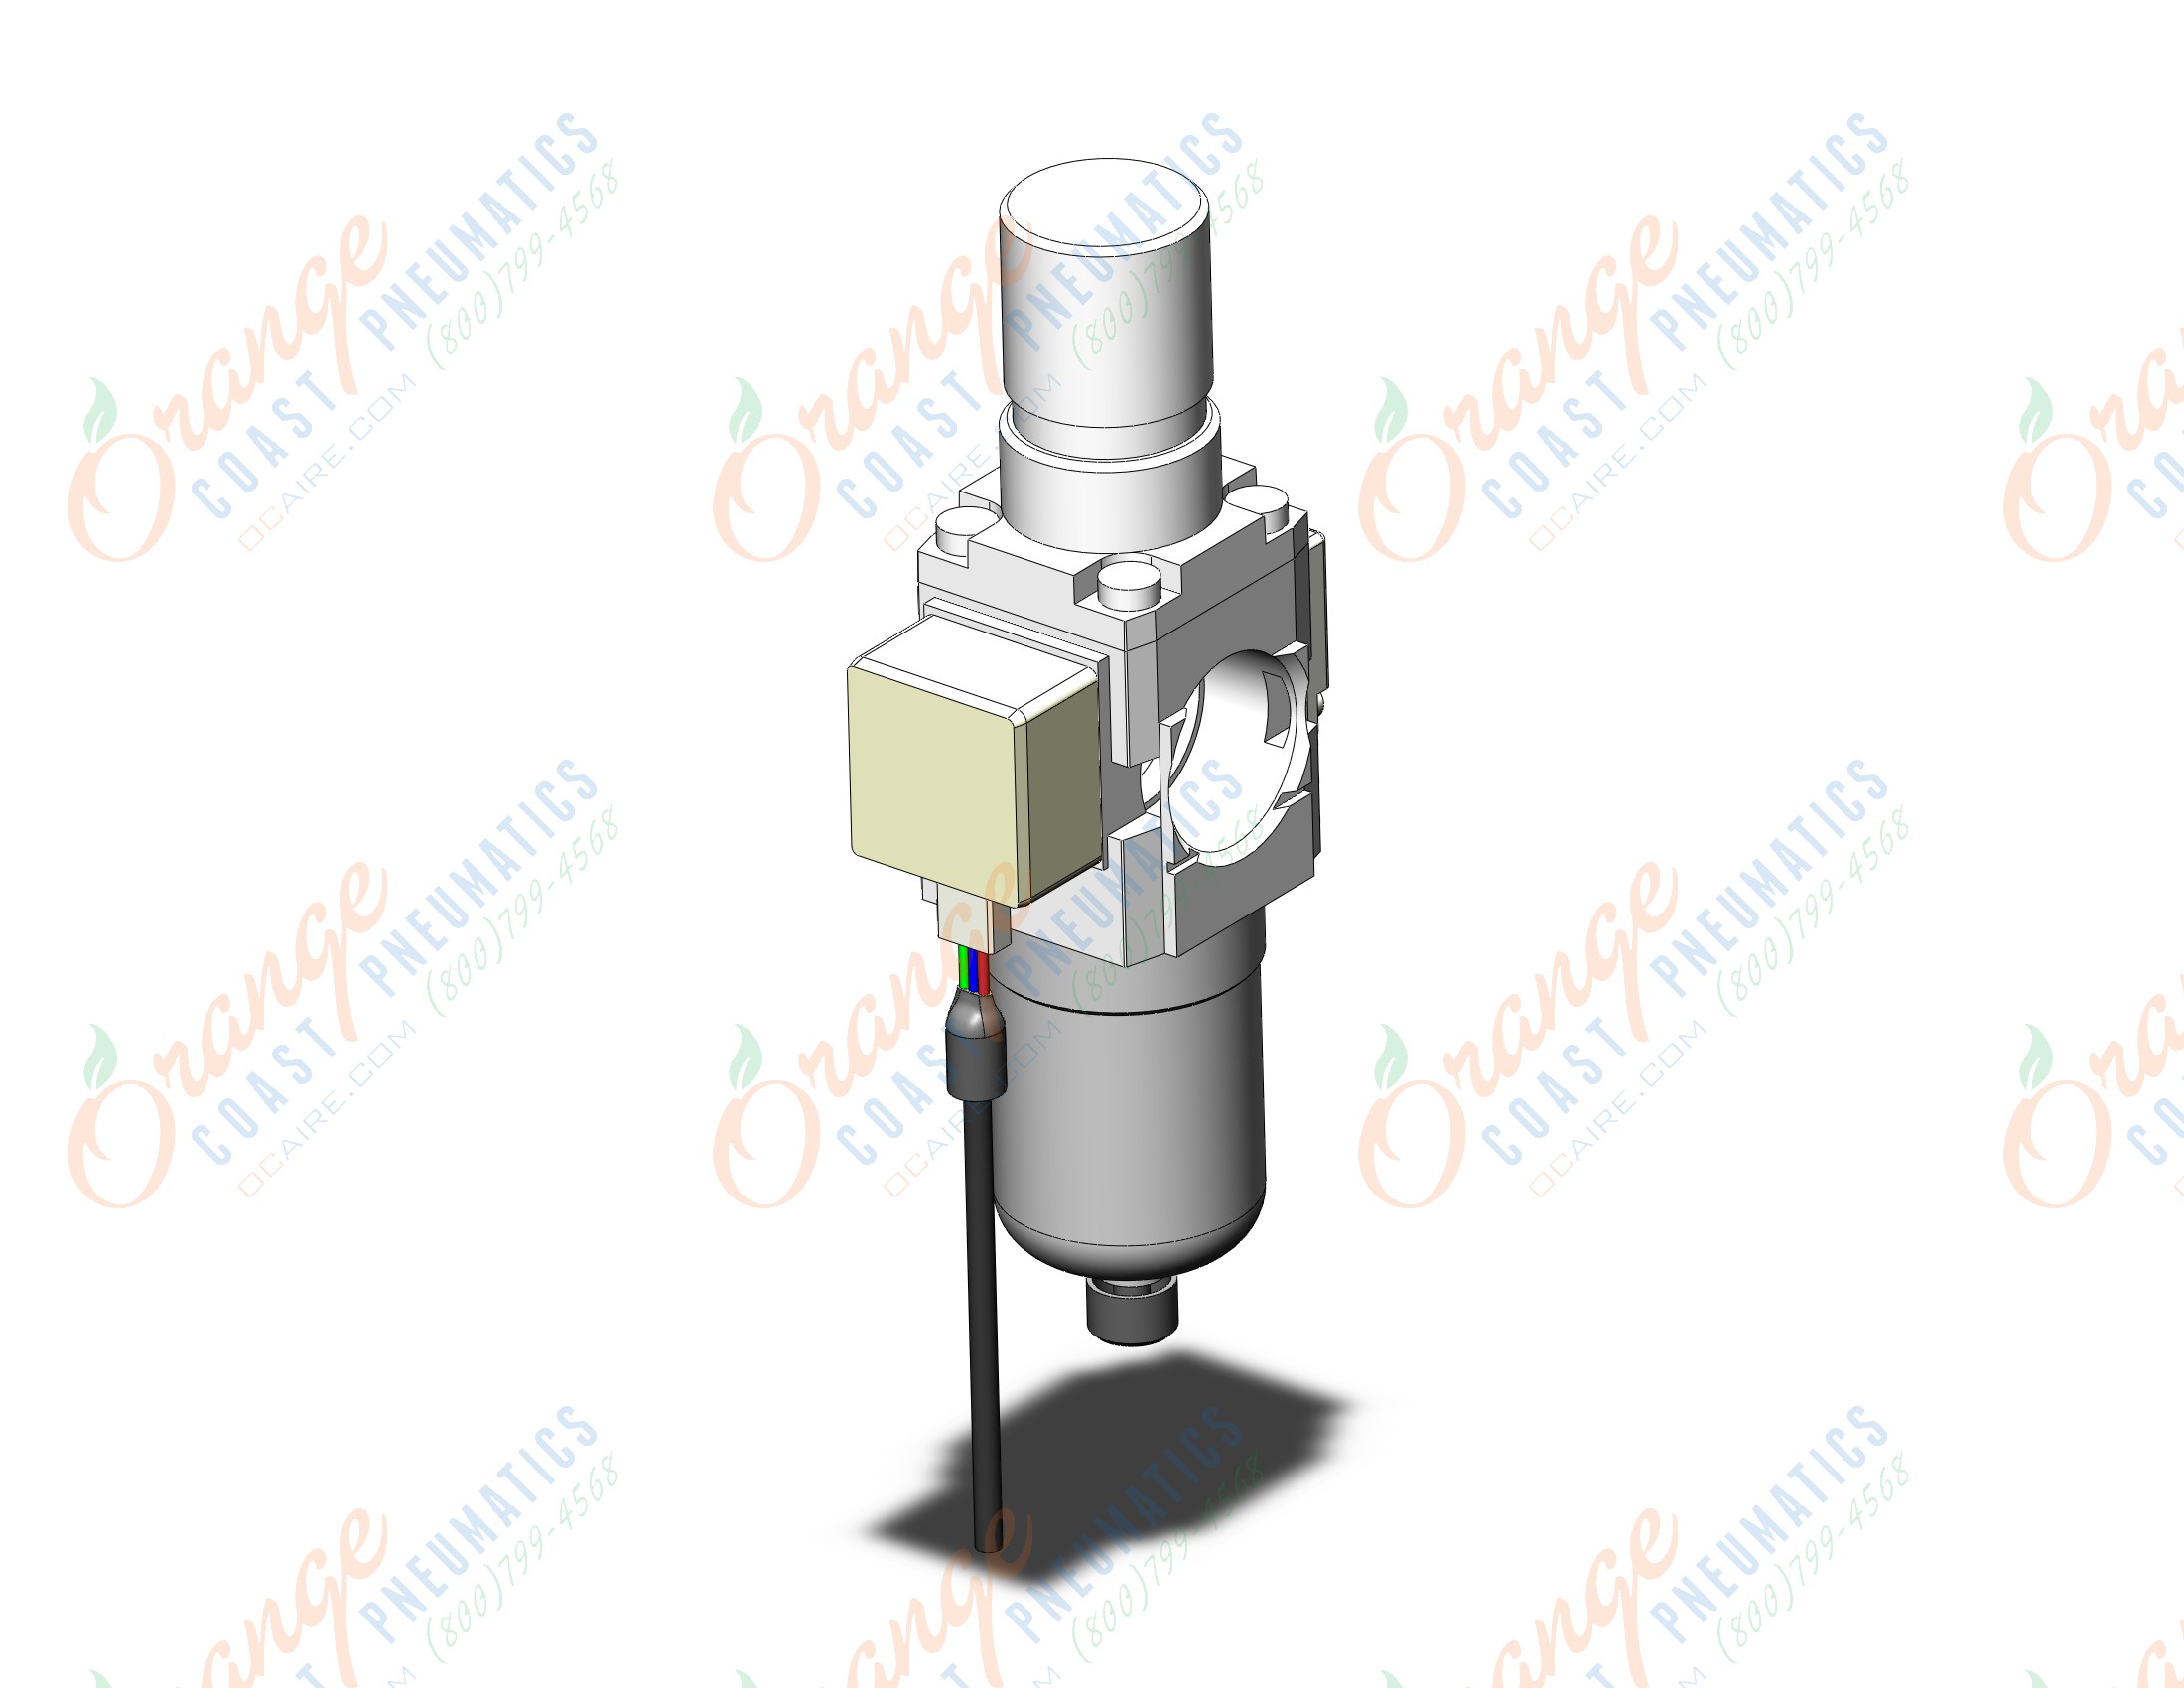 SMC AW20K-N02E3-JZ-B filter/regulator, FILTER/REGULATOR, MODULAR F.R.L.